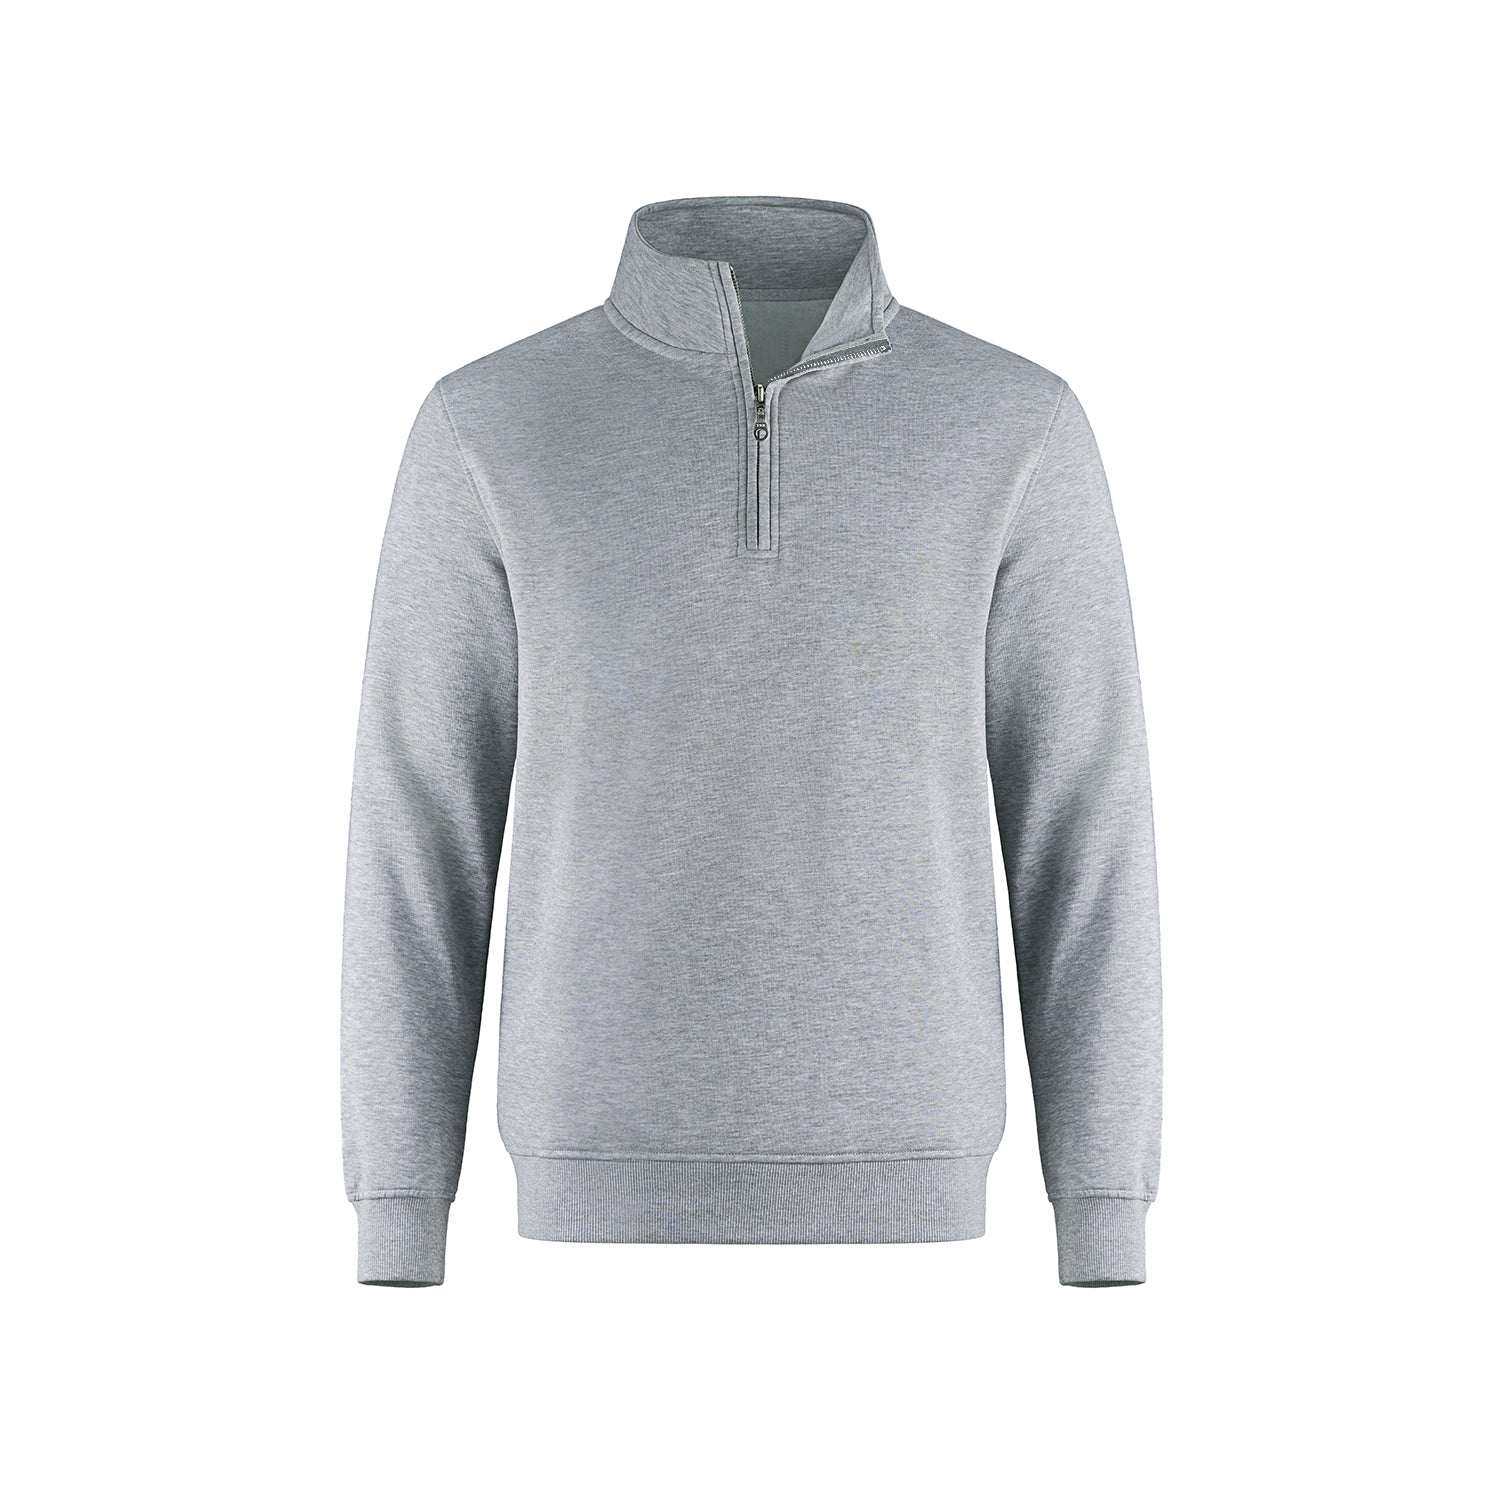 L0545Y - Flux Youth 1/4 Zip Pullover Athletic Grey Heather